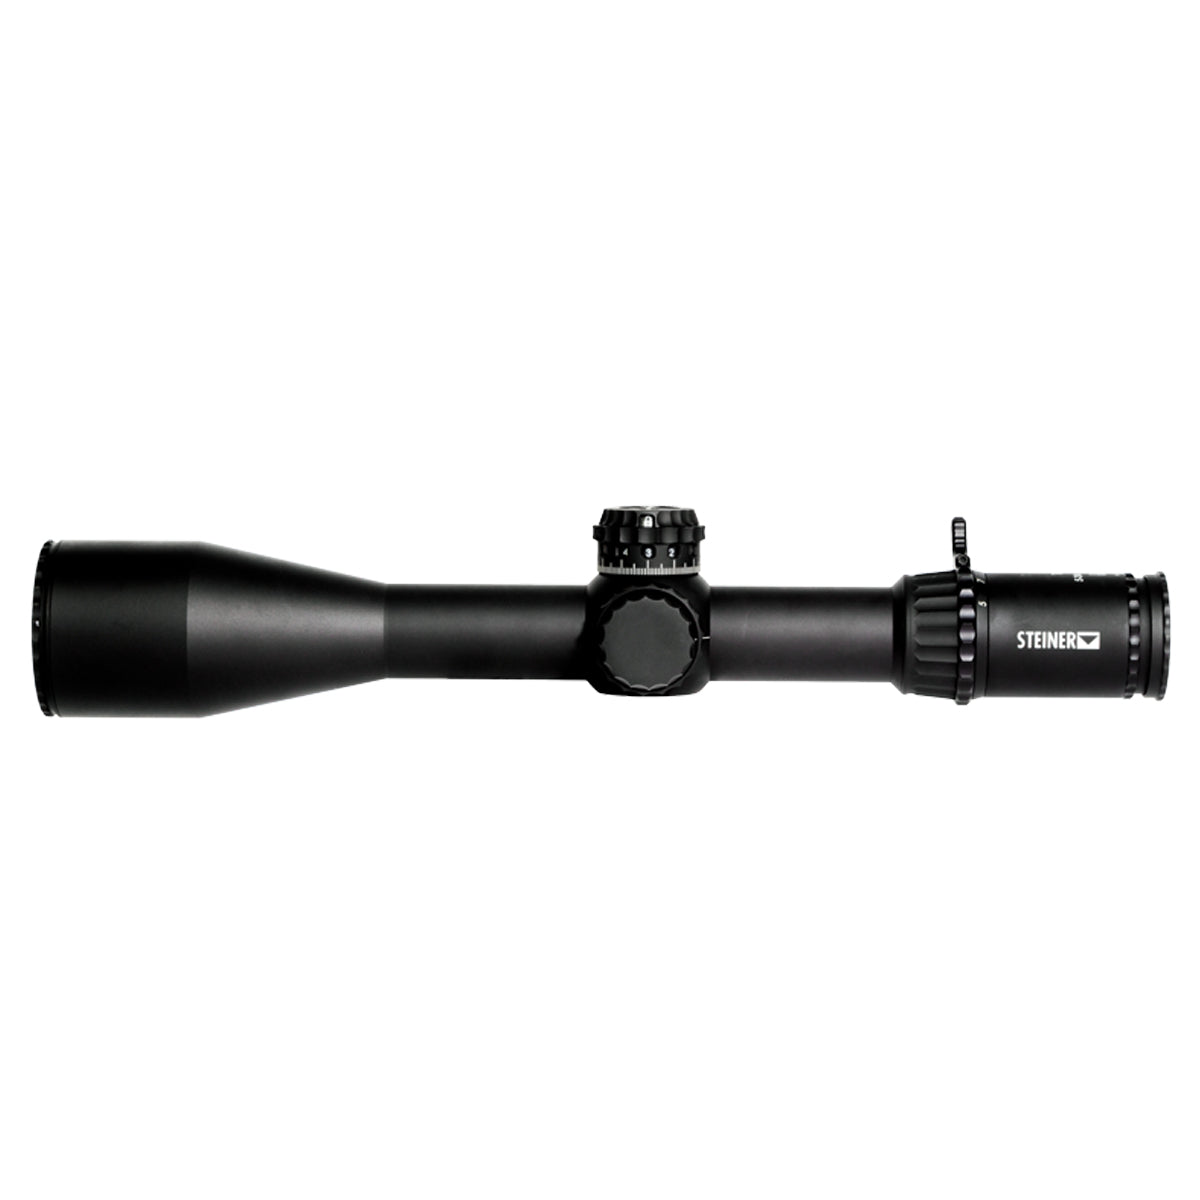 Steiner Optics T6Xi 5-30x56mm SCR2 Riflescope in  by GOHUNT | Steiner Optics - GOHUNT Shop